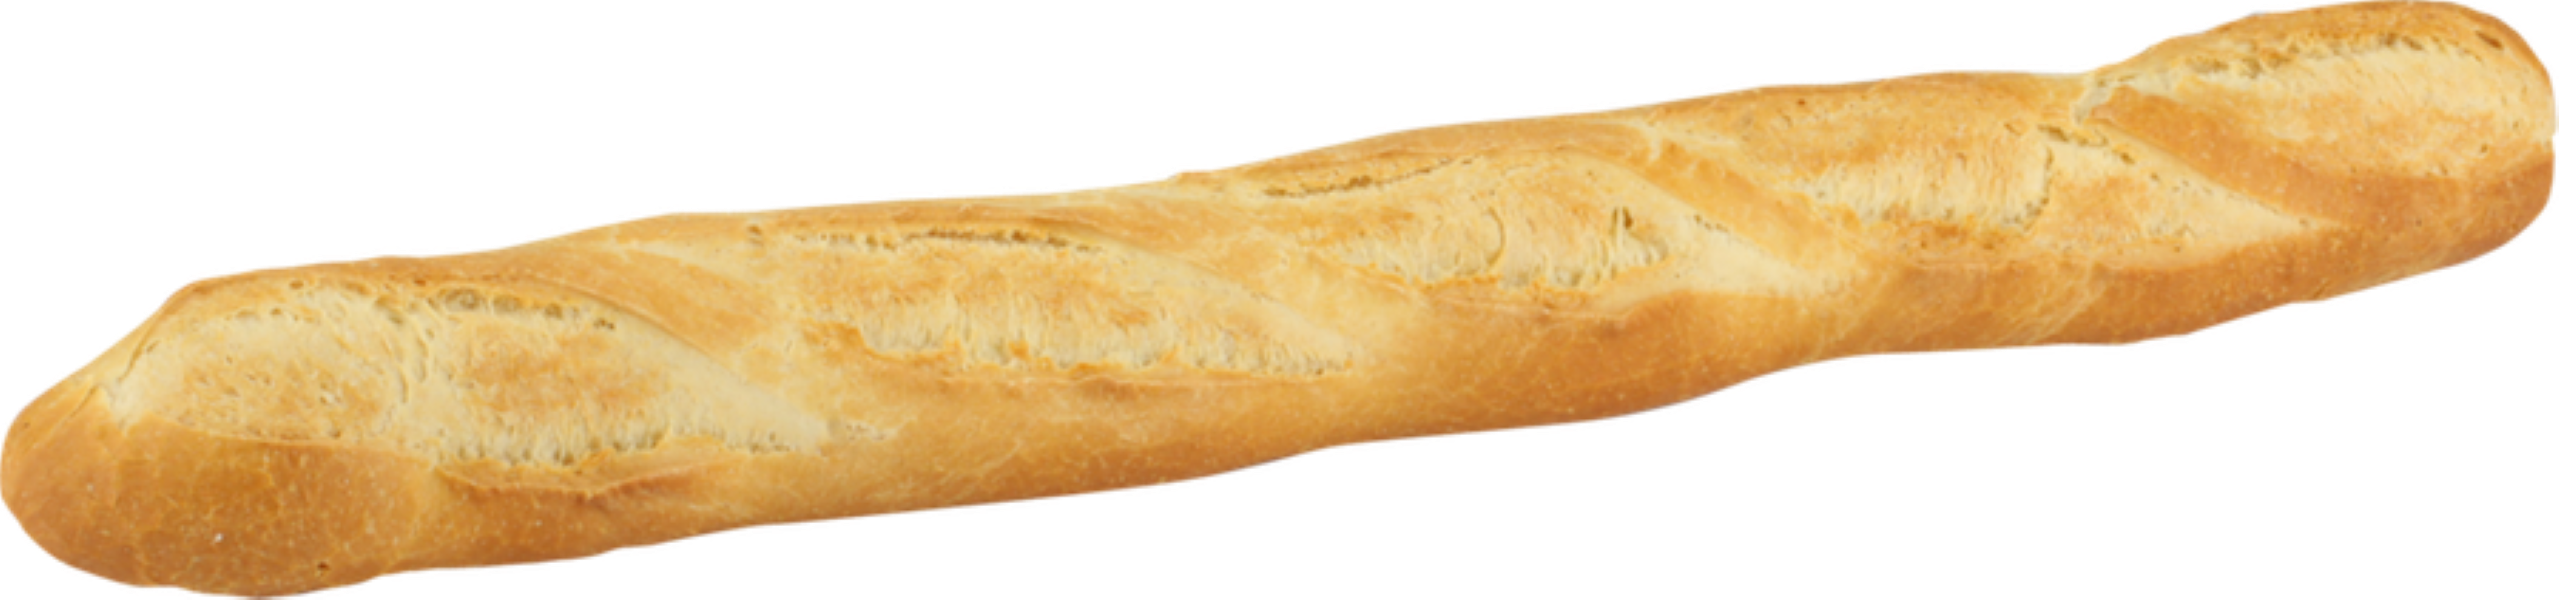 Багет лента. Багет традиционный 230г. Багет пшеничный. Багет традиционный лента. Хлеб лента багет Fresh.